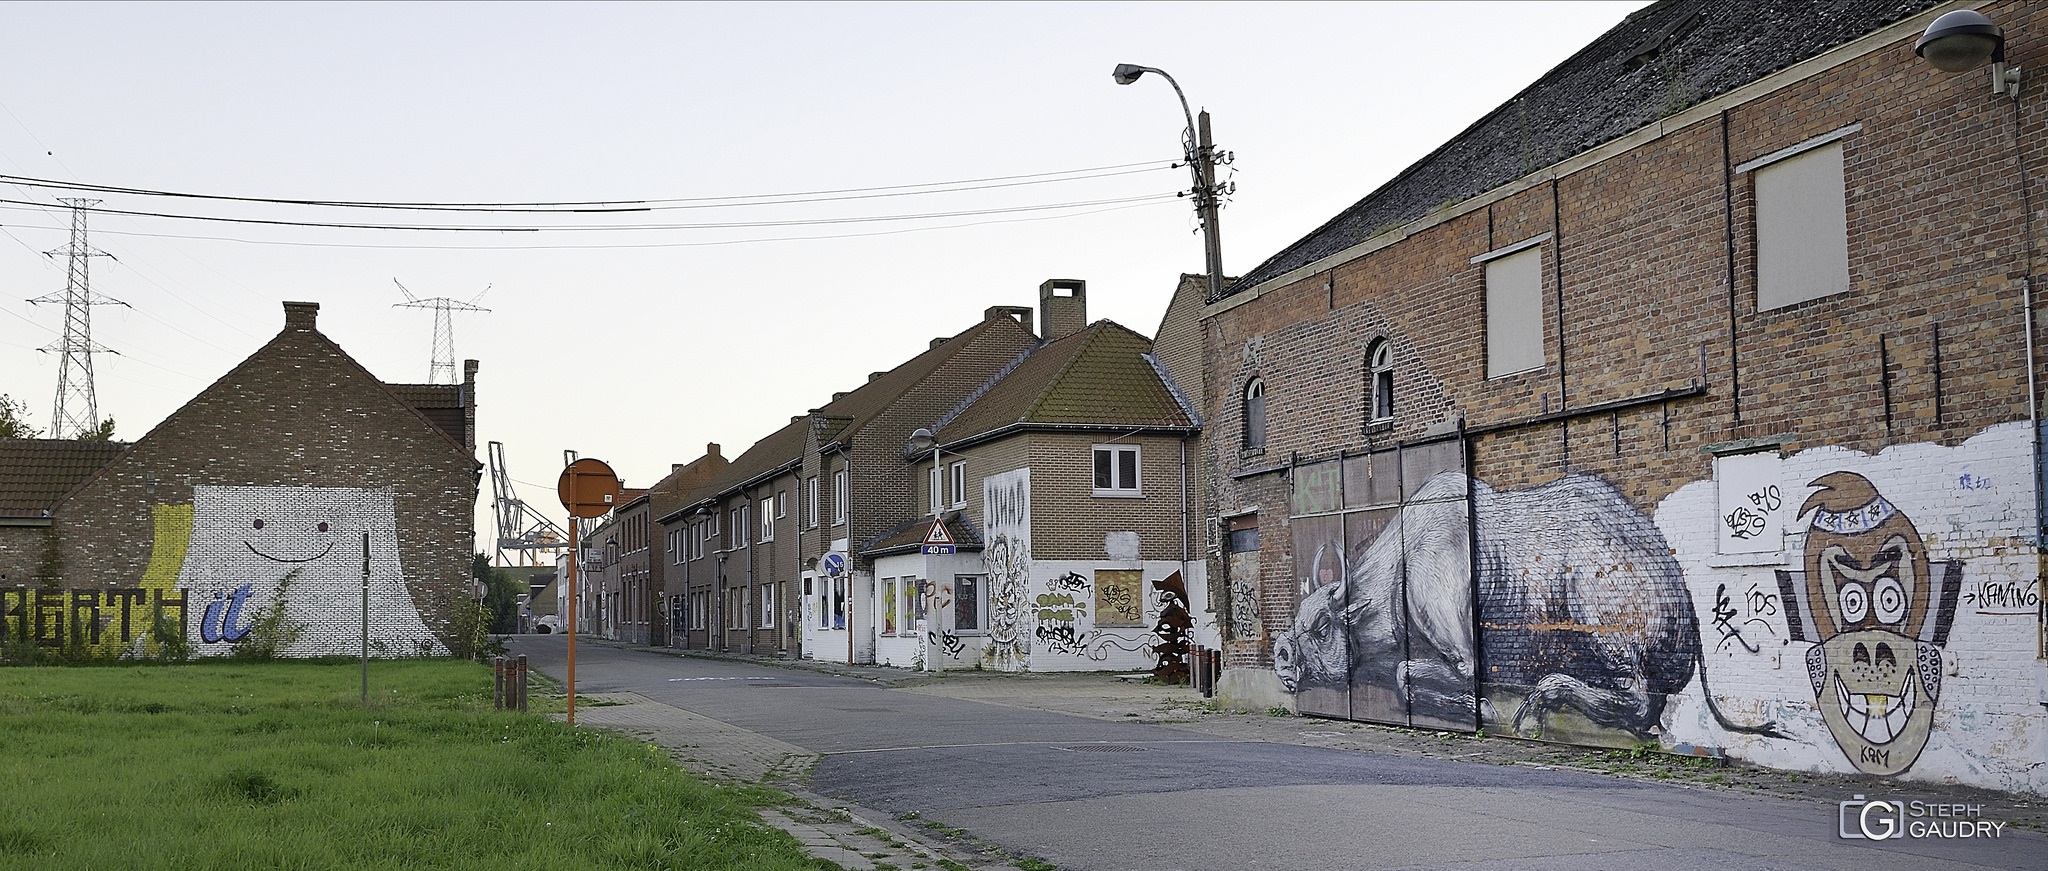 Doel, Abandoned street [Click to start slideshow]